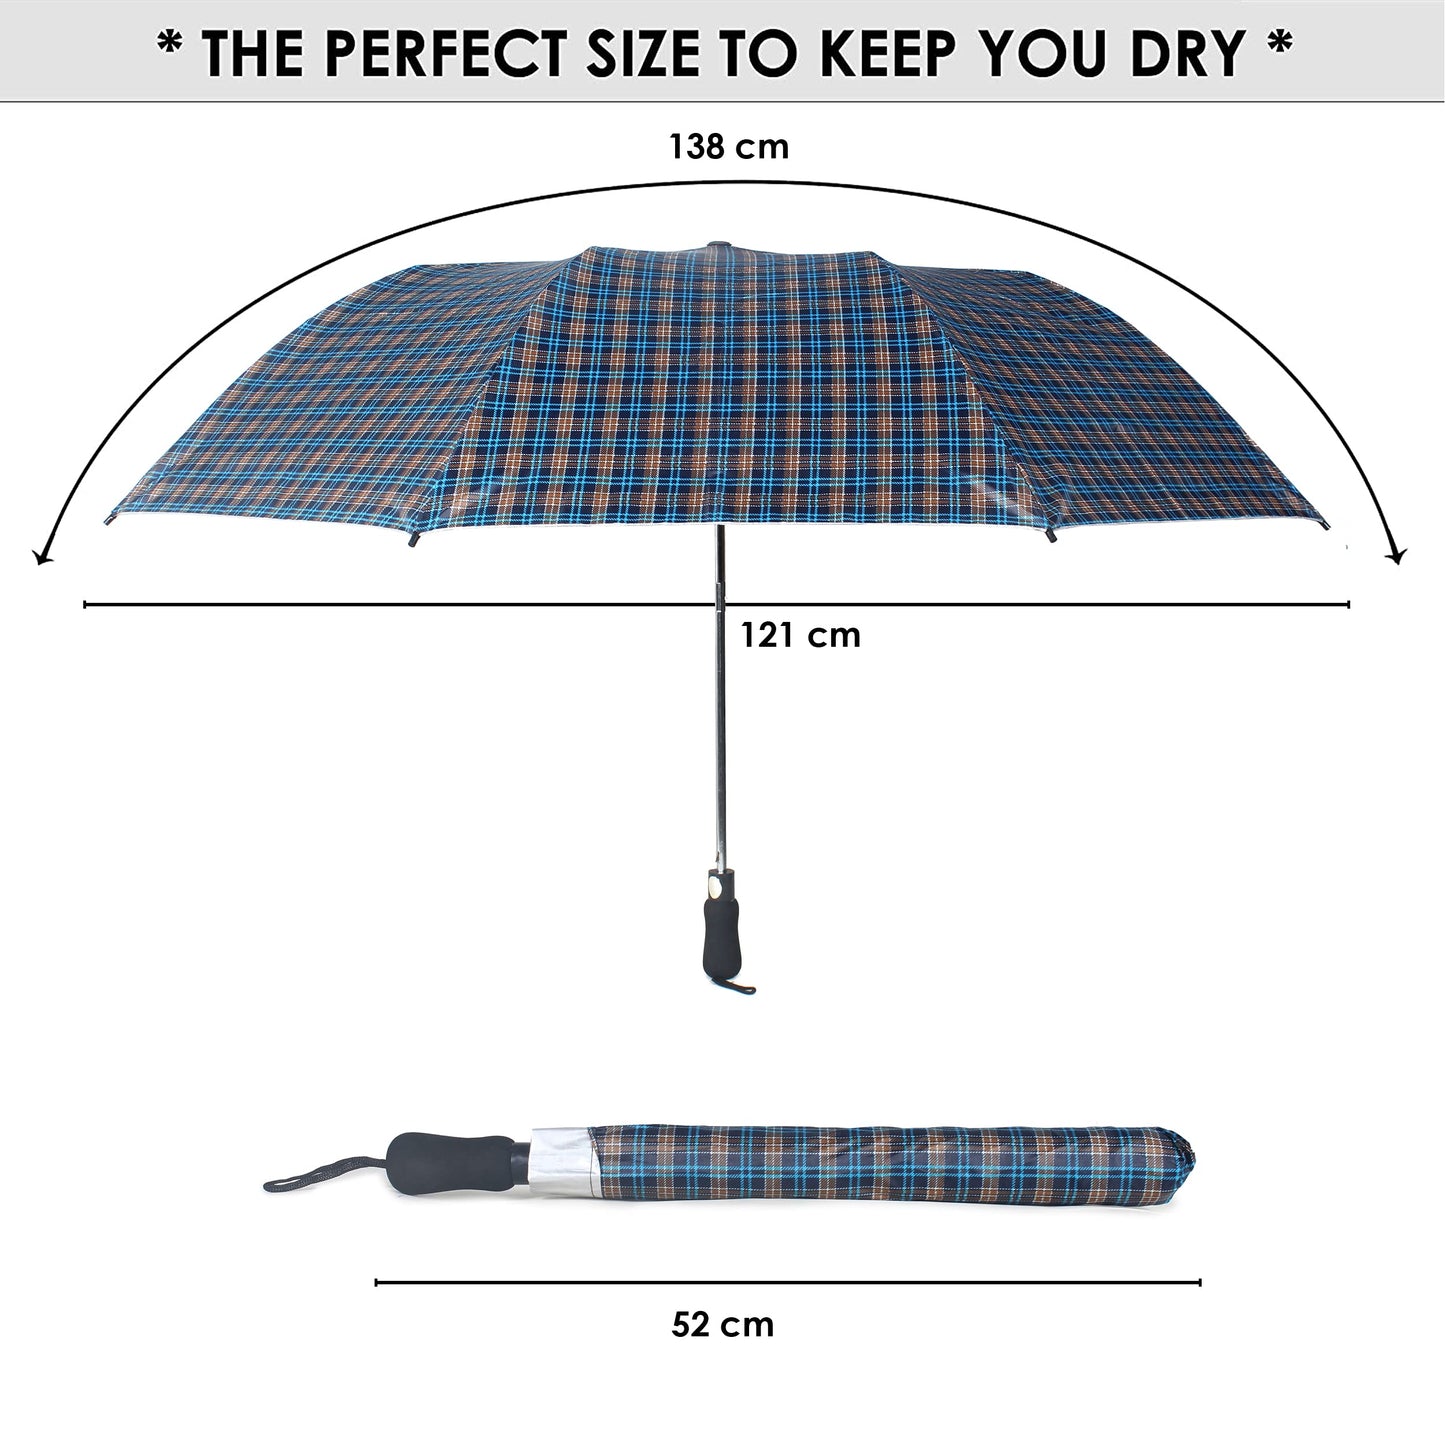 THE CLOWNFISH Umbrella 2 Fold Auto Open Waterproof Pongee Umbrellas For Men and Women (Checks Design- Peacock Blue)